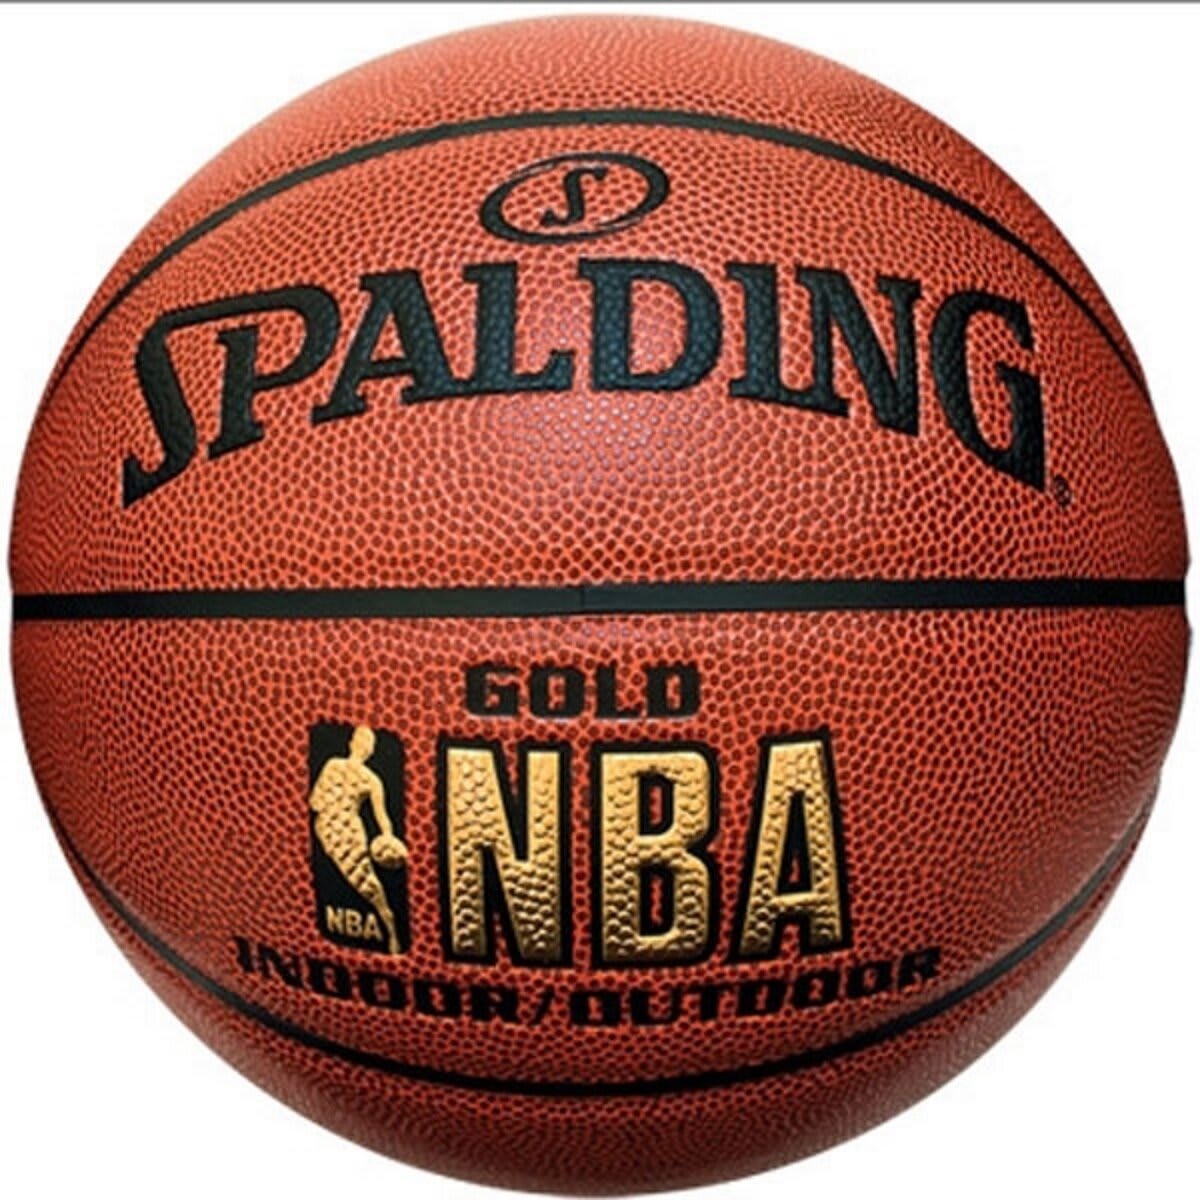 Spalding NBA Gold Basketball | Sportsmans Warehouse Kiosk